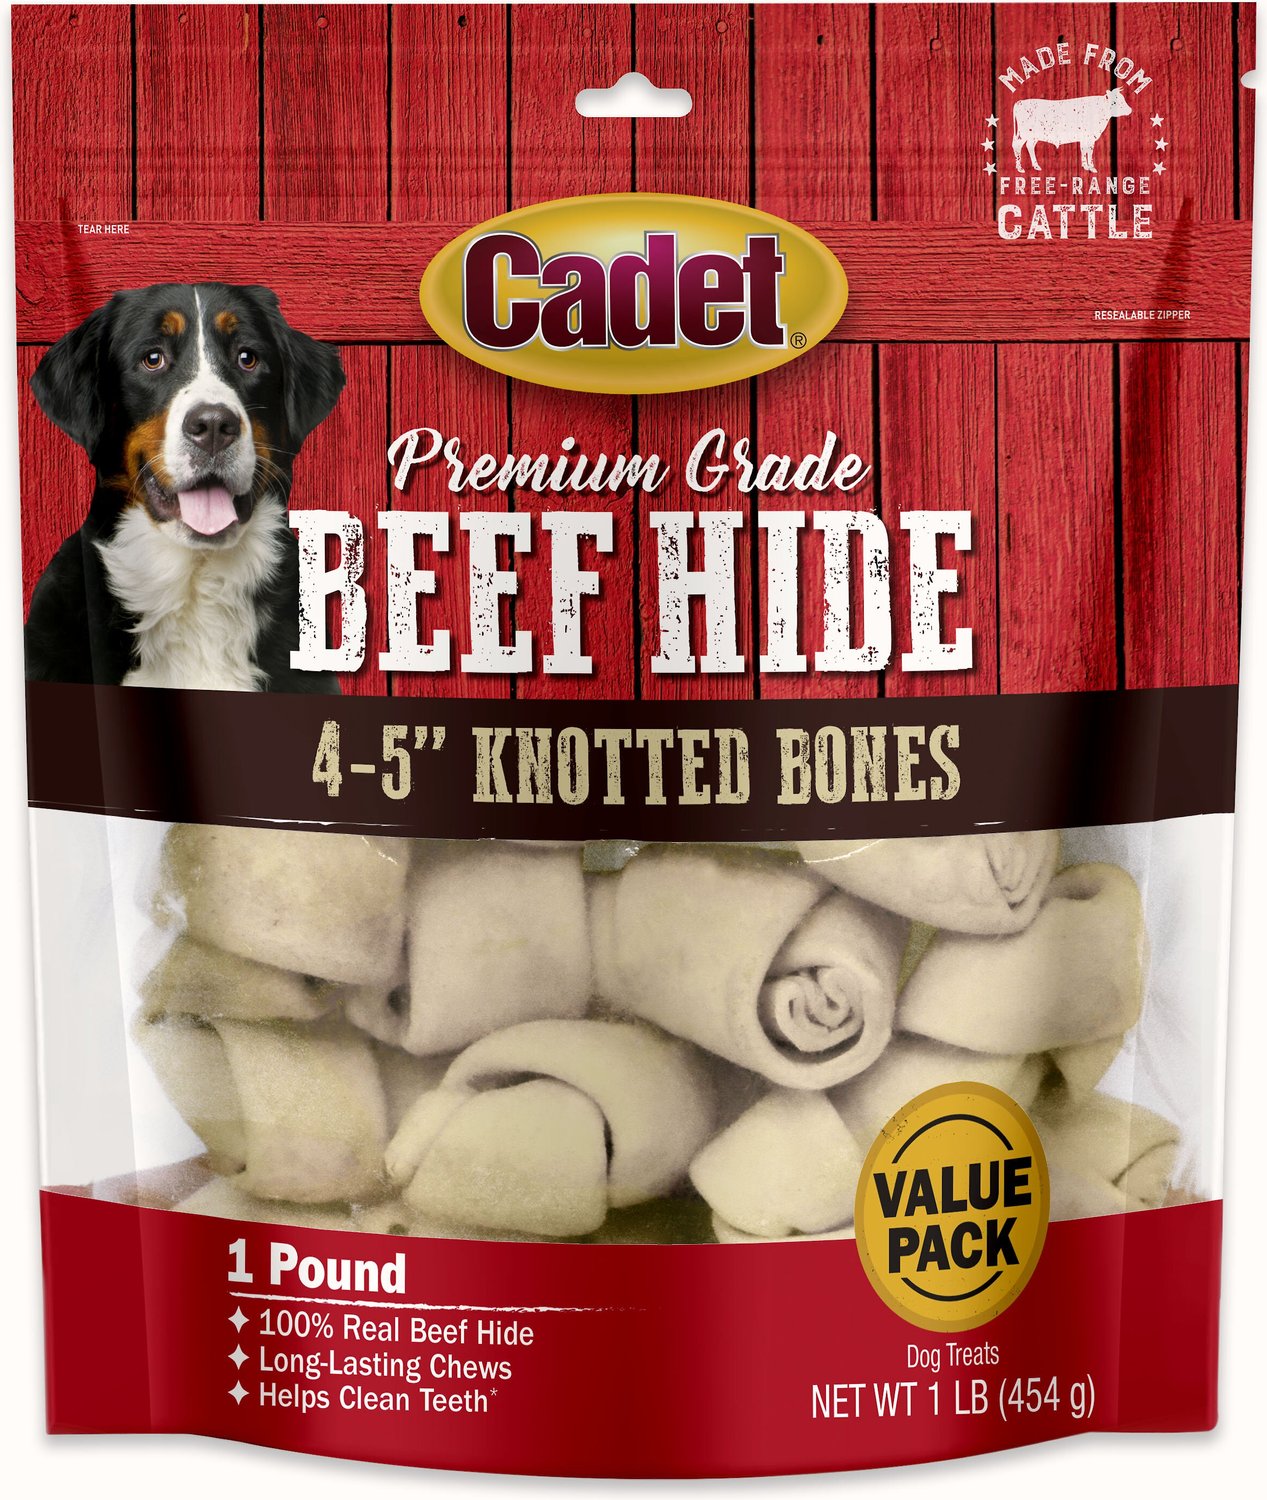 rawhide bone dog treats